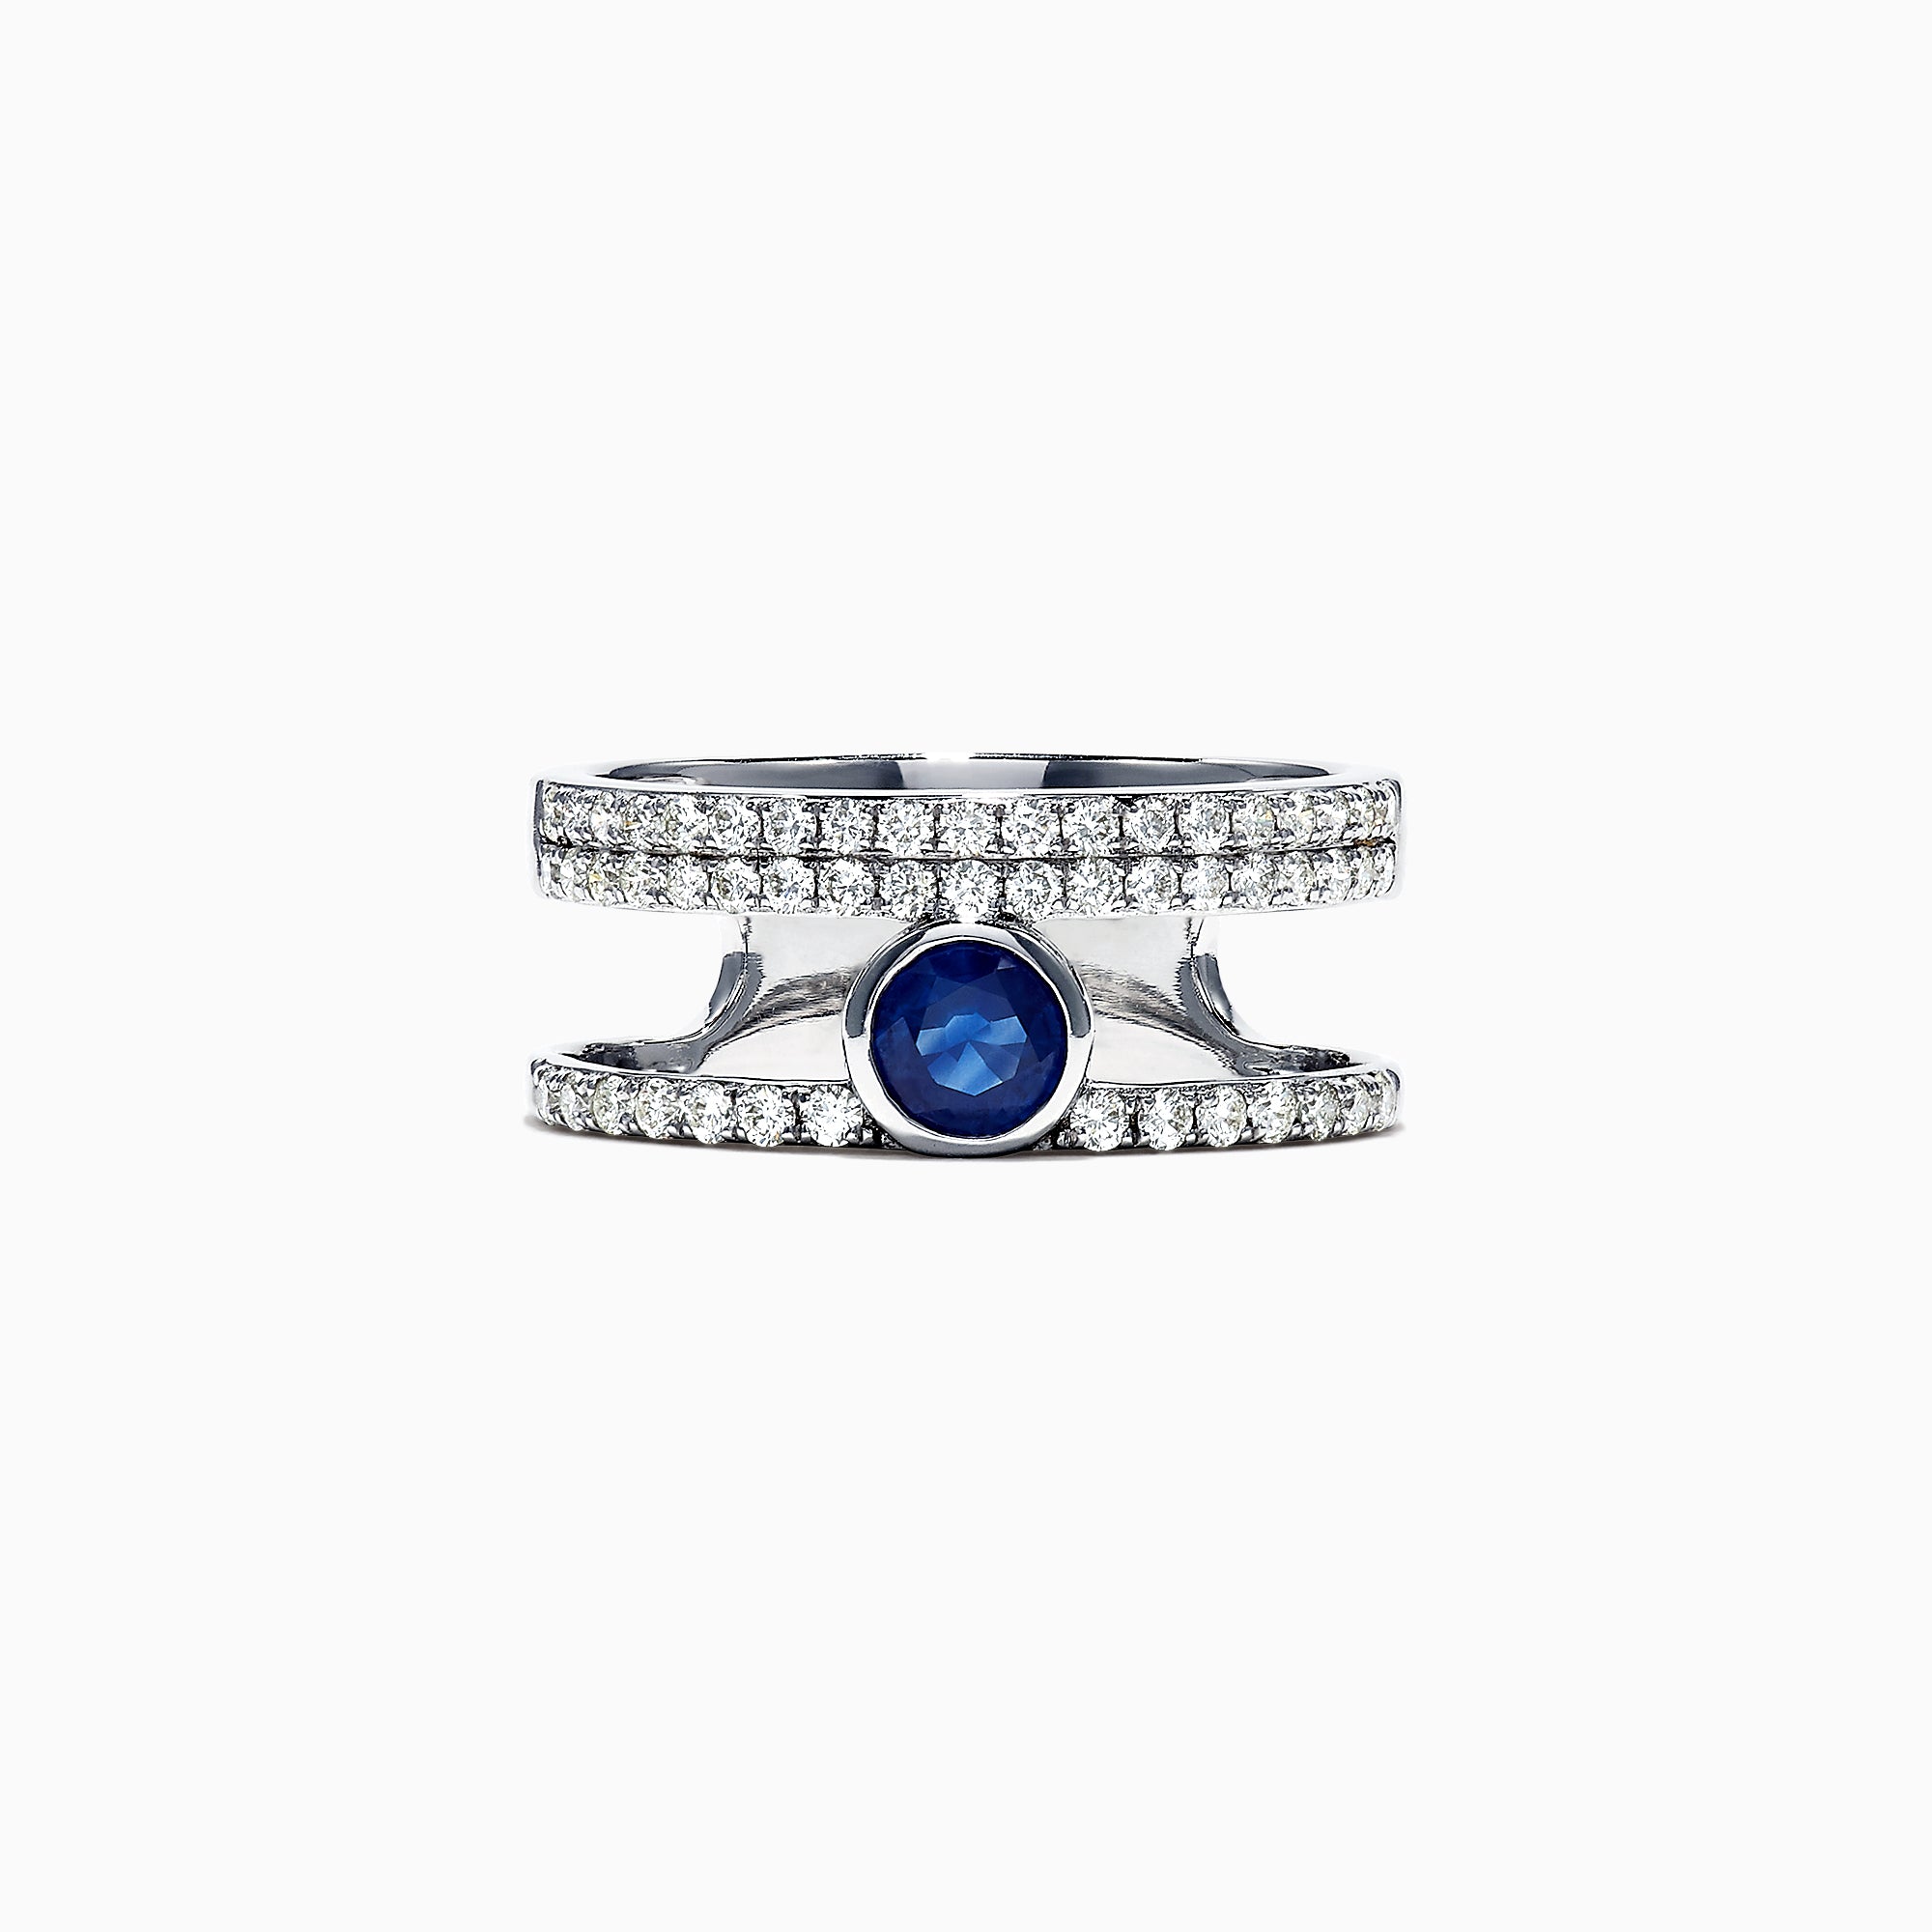 Effy Royale Bleu 14K White Gold Diamond and Sapphire Ring, 1.06 TCW